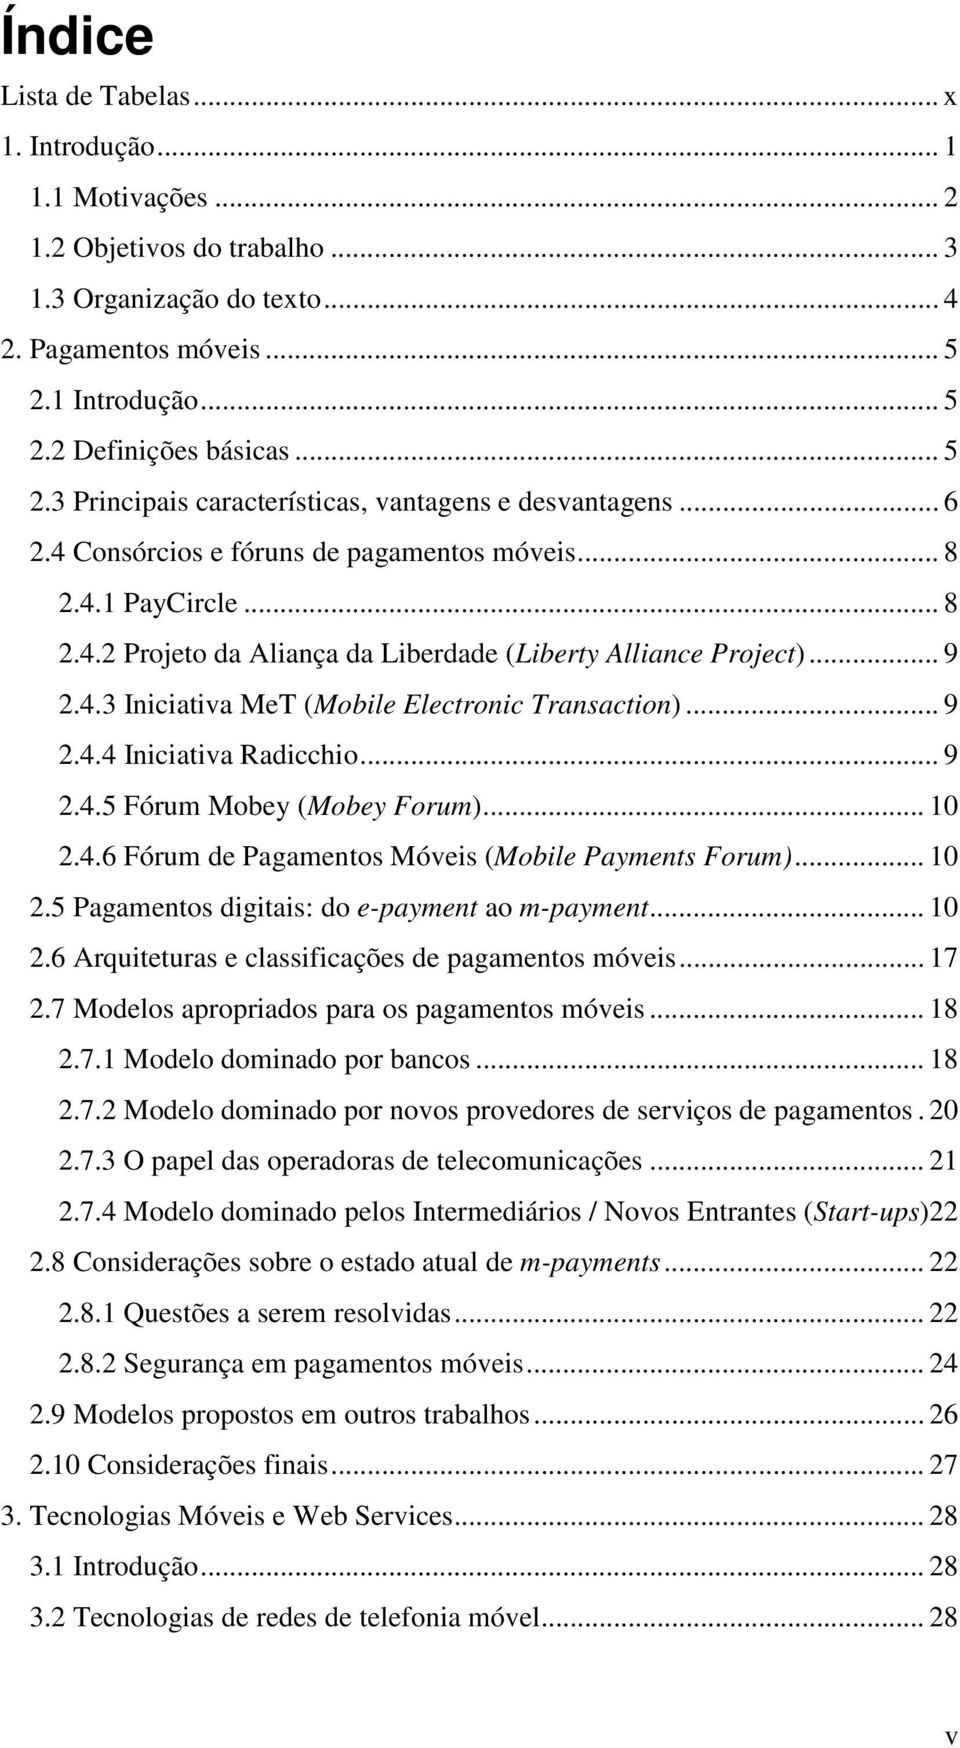 .. 9 2.4.3 Iniciativa MeT (Mobile Electronic Transaction)... 9 2.4.4 Iniciativa Radicchio... 9 2.4.5 Fórum Mobey (Mobey Forum)... 10 2.4.6 Fórum de Pagamentos Móveis (Mobile Payments Forum)... 10 2.5 Pagamentos digitais: do e-payment ao m-payment.